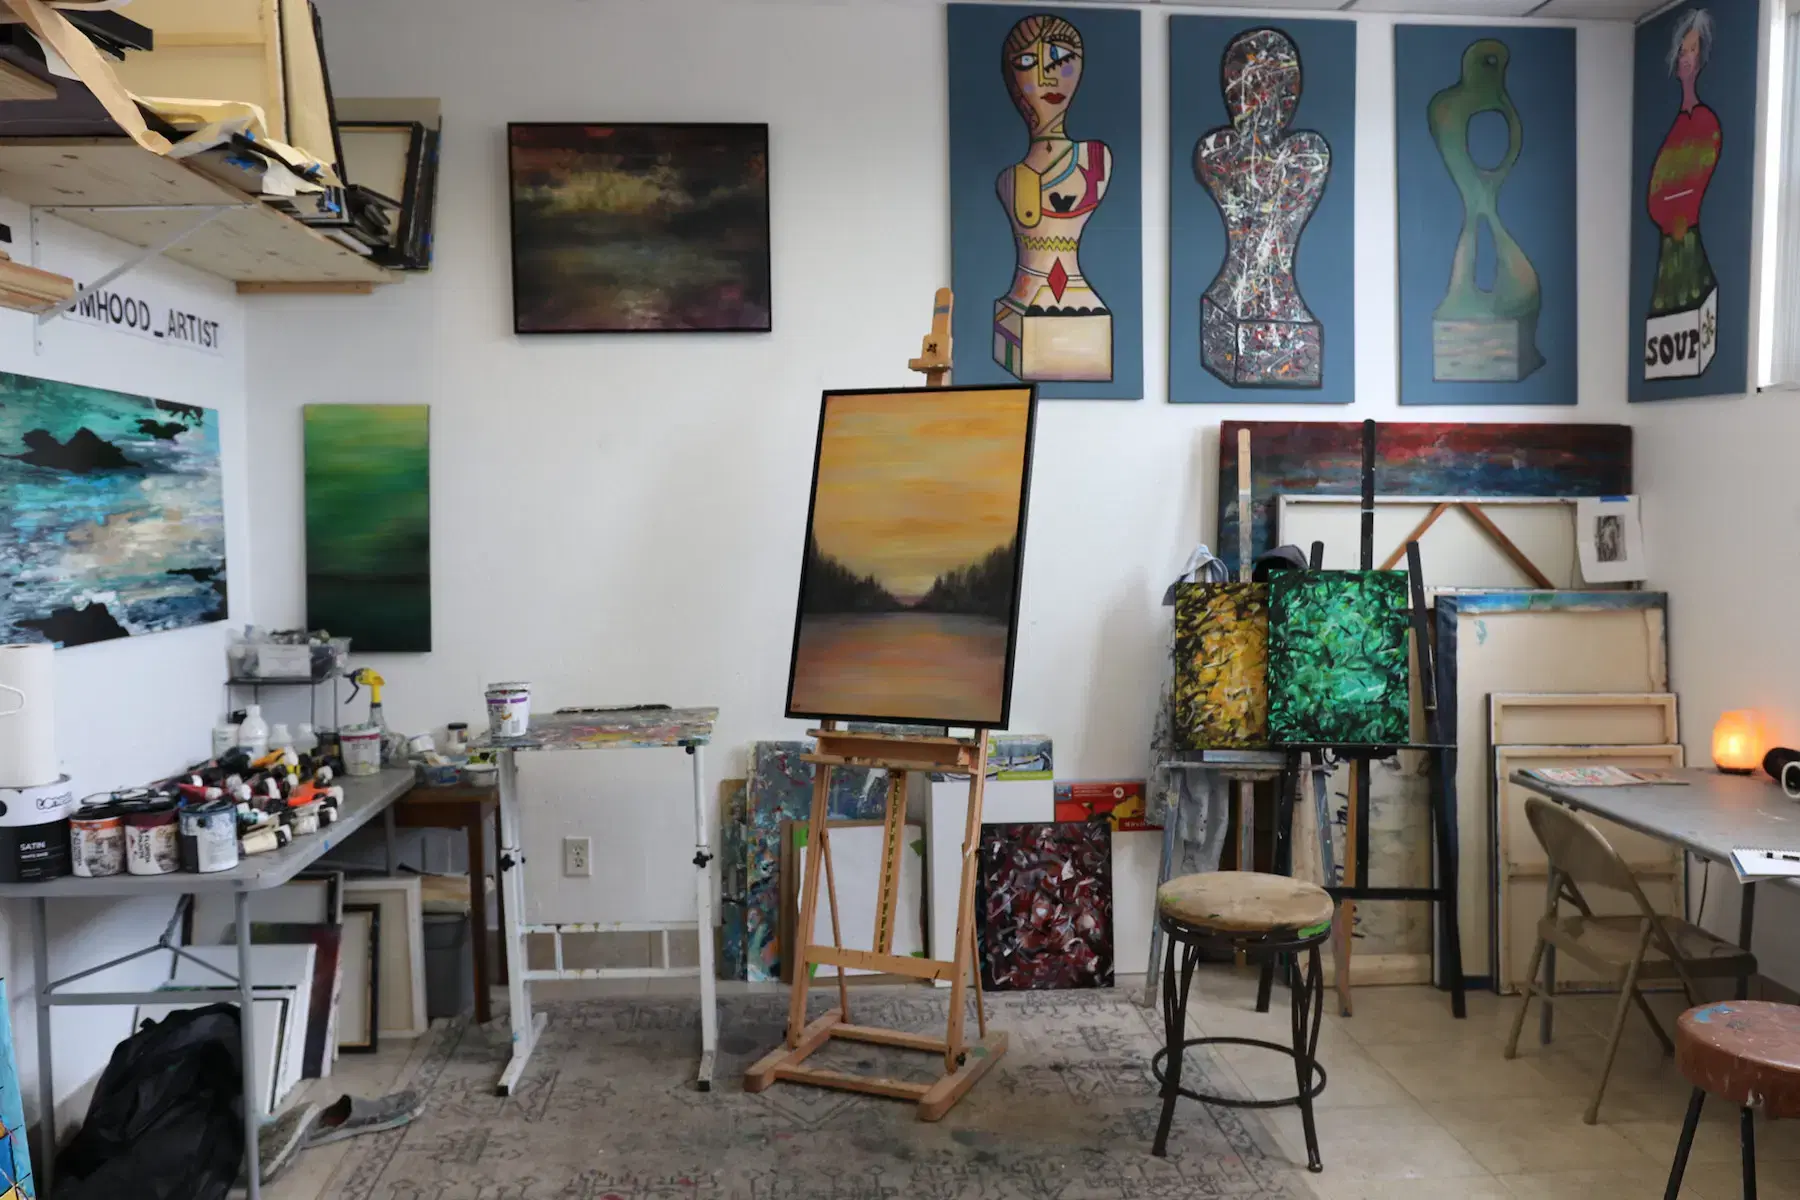 studio space with Dennis Hood Art in background.